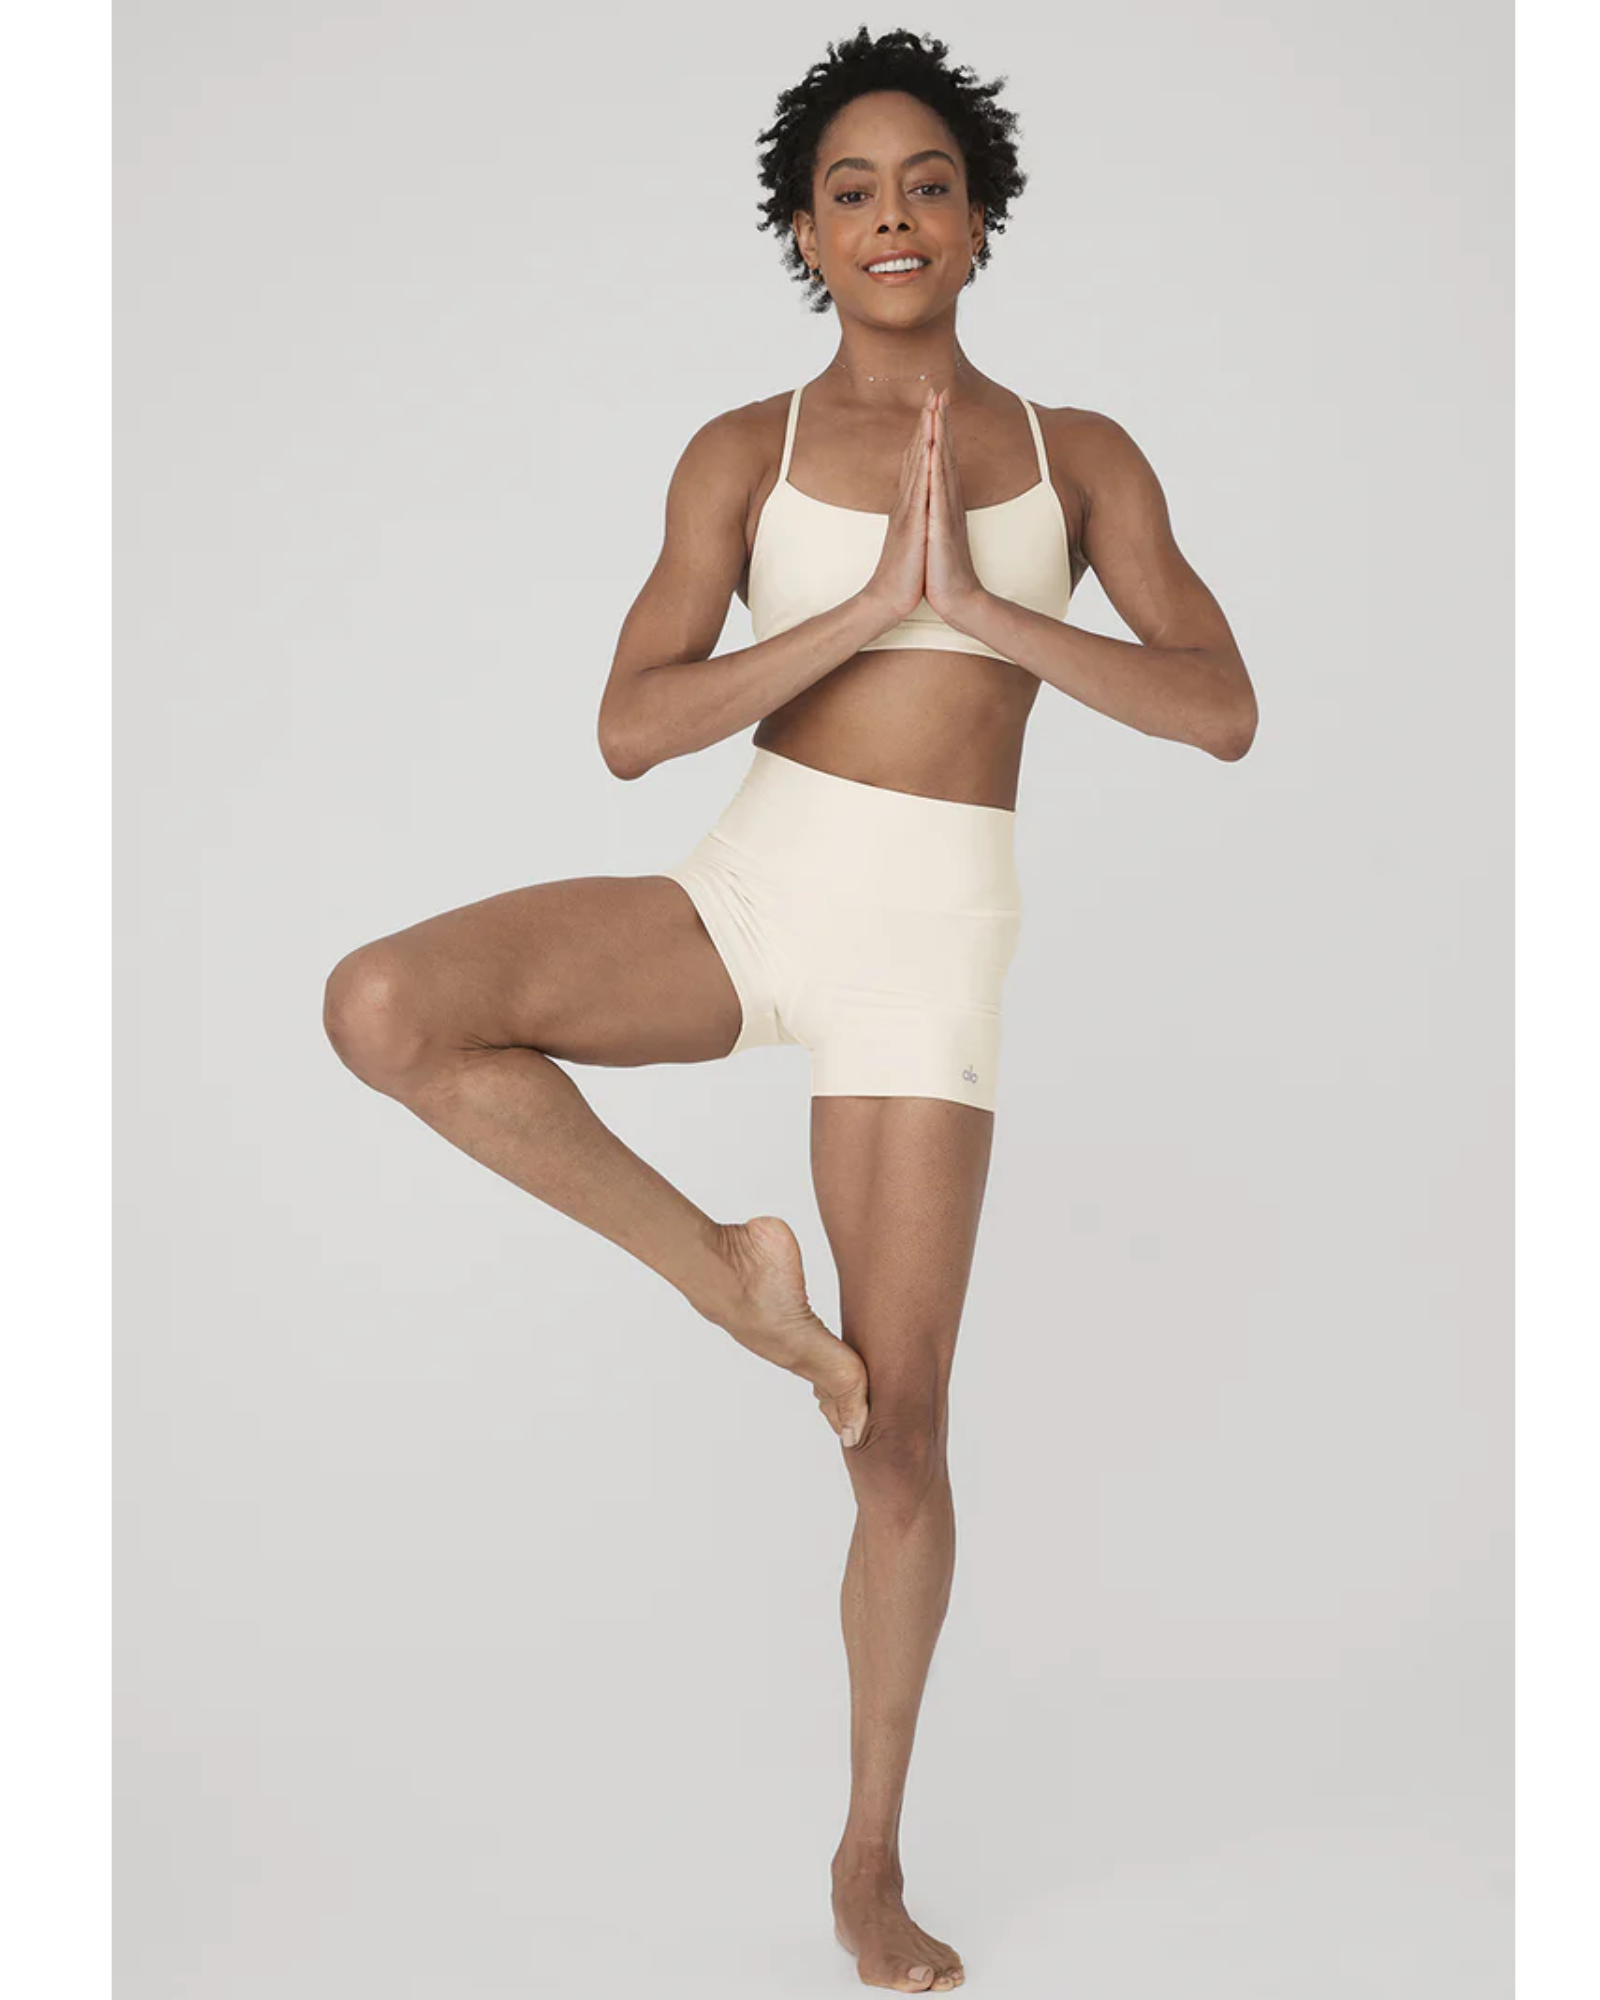 Alo Yoga “I Embody” — Victoria Gibbs Yoga